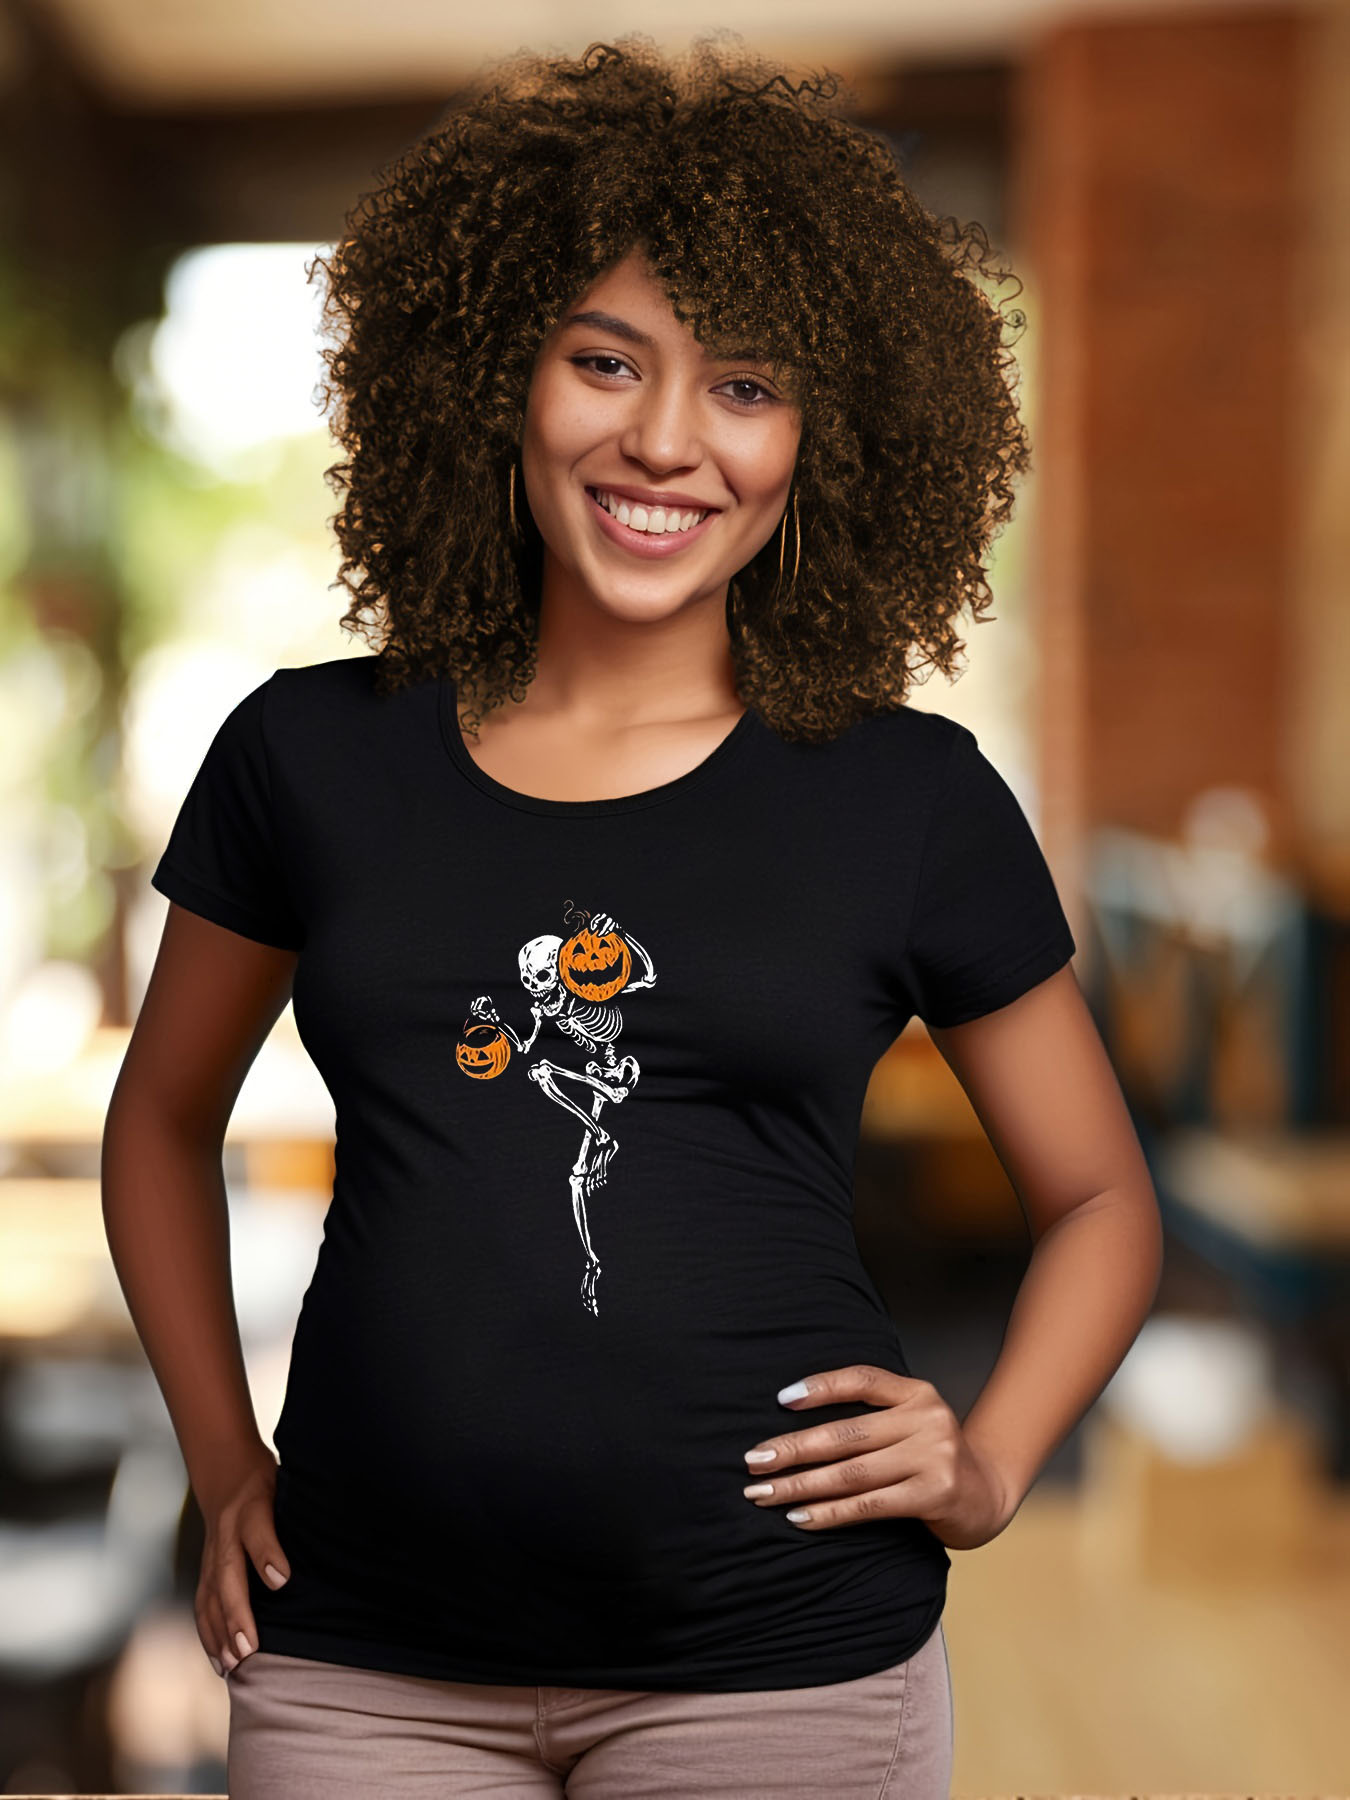 Camisetas: Esqueleto Embarazada